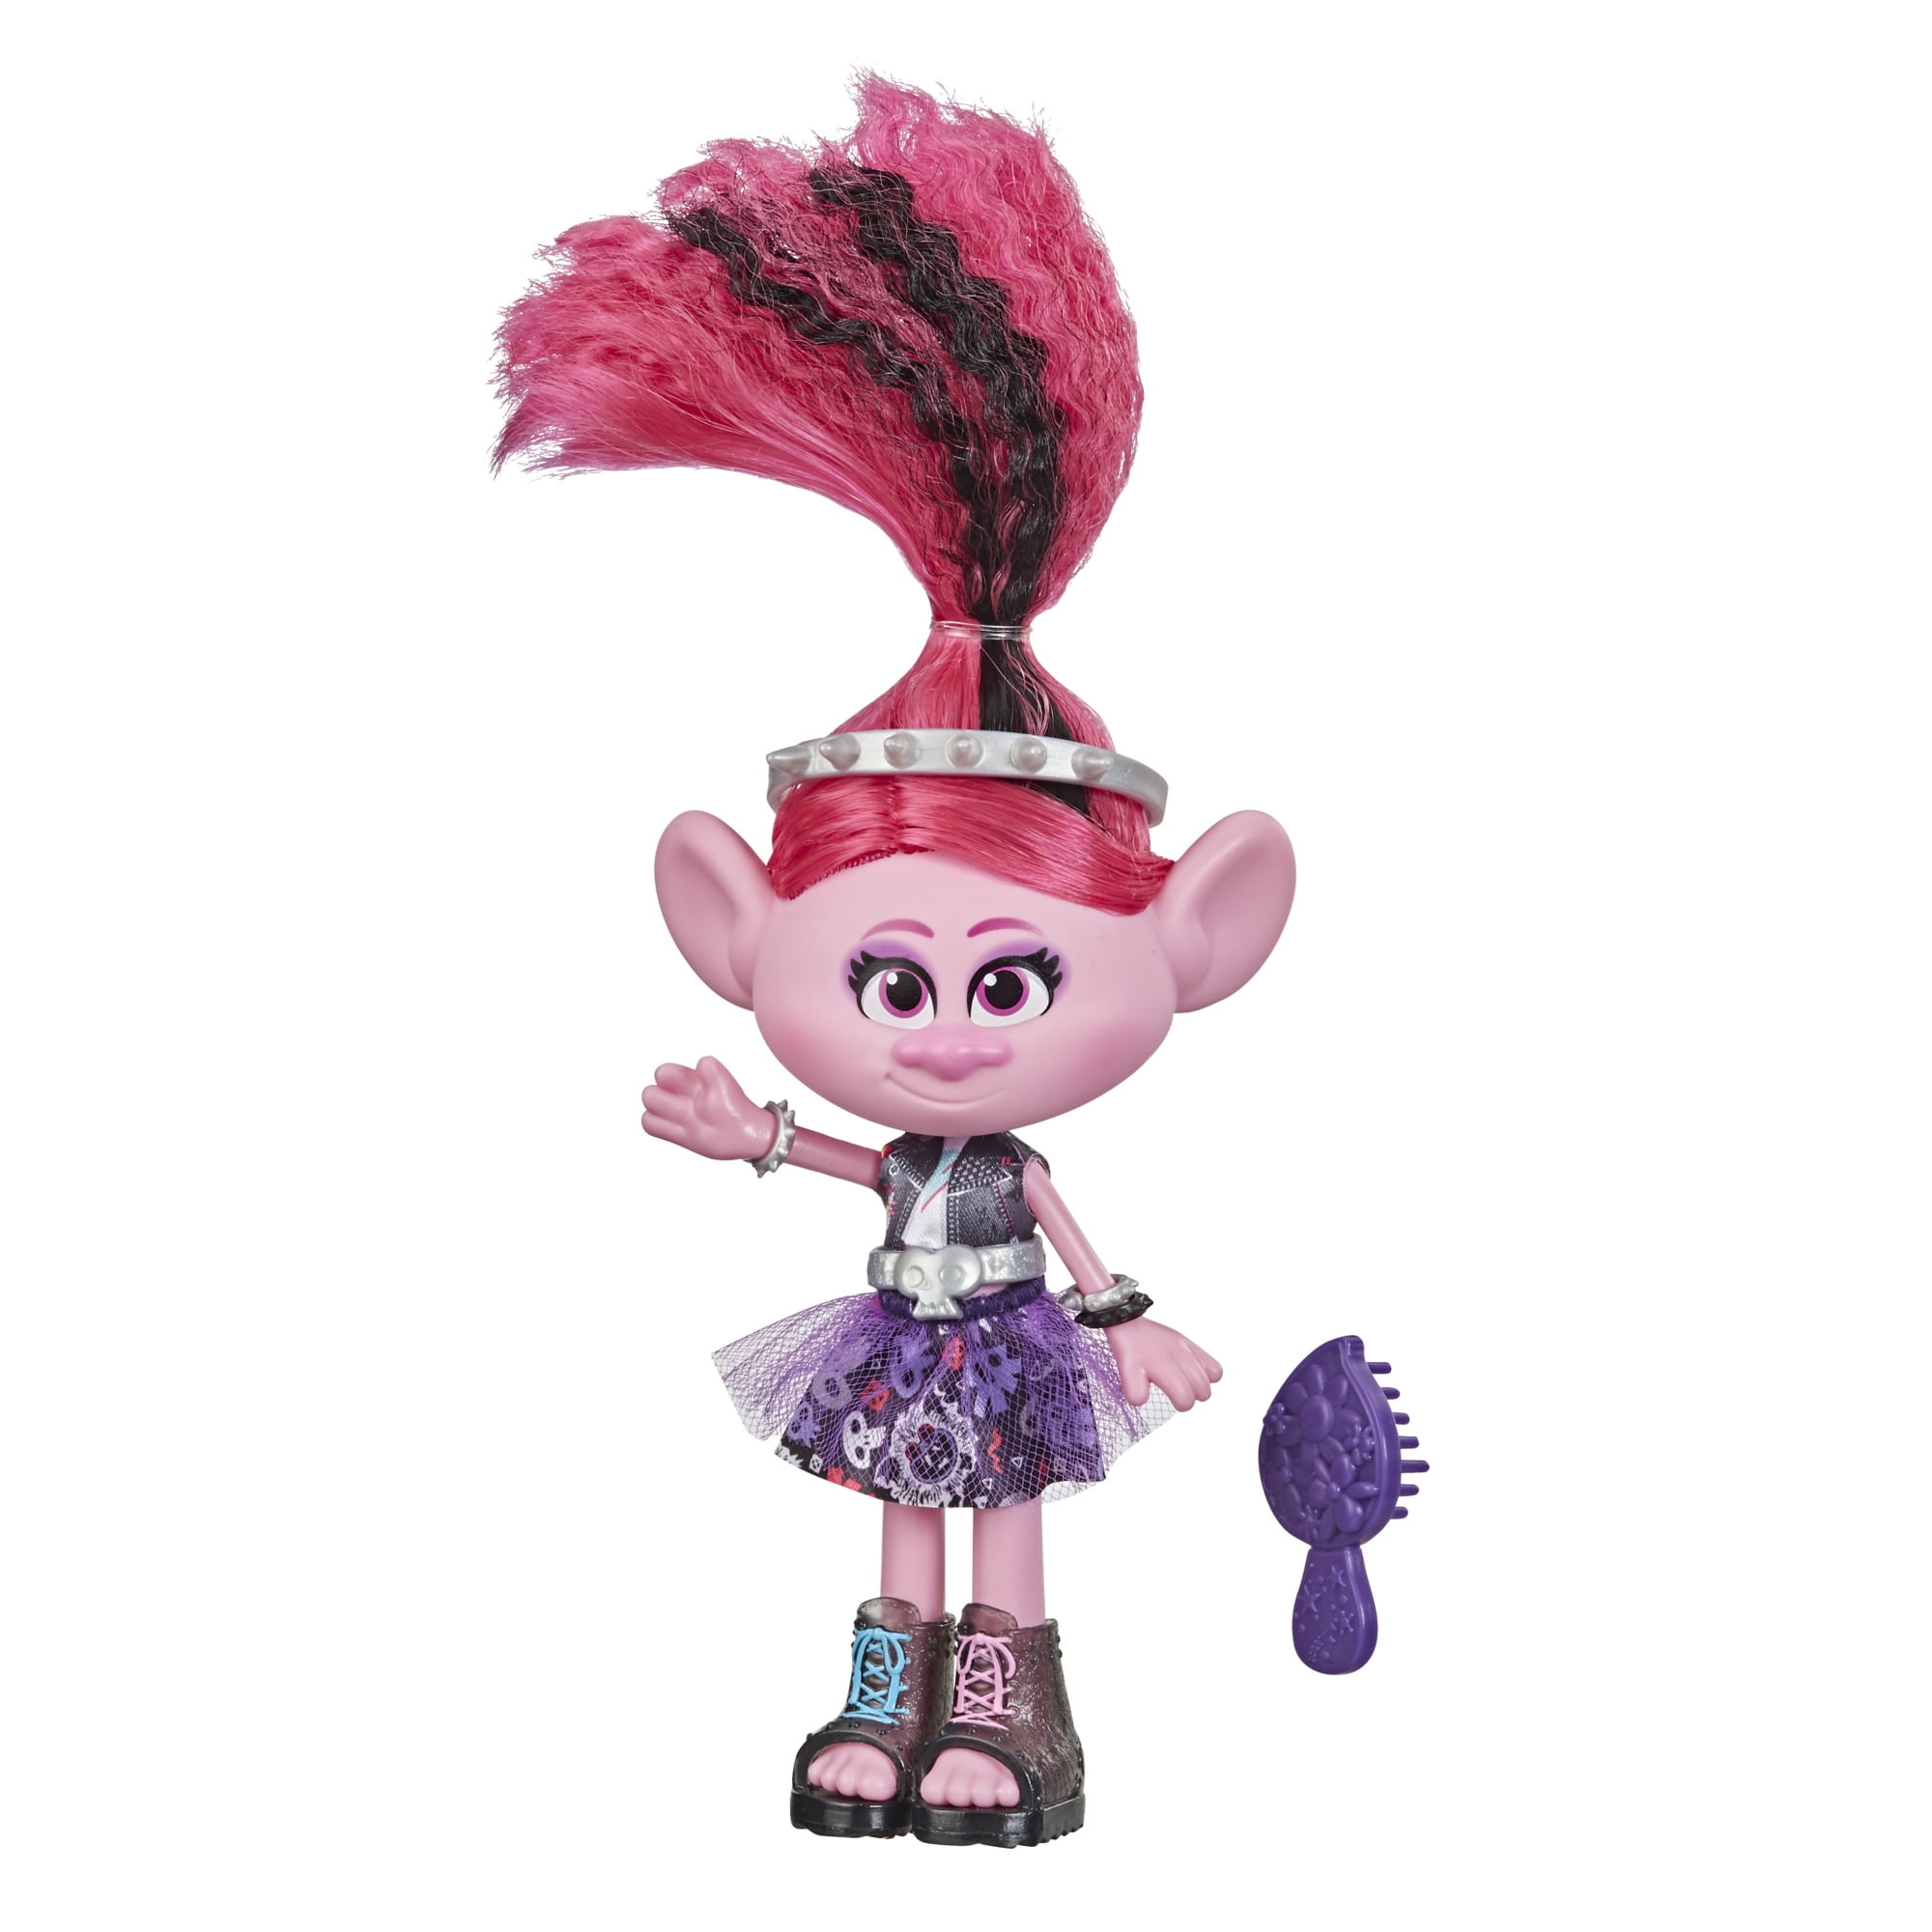 Trolls World Tour Mermaid Figure Hasbro Toys Dreamworks Ages 4 for sale online